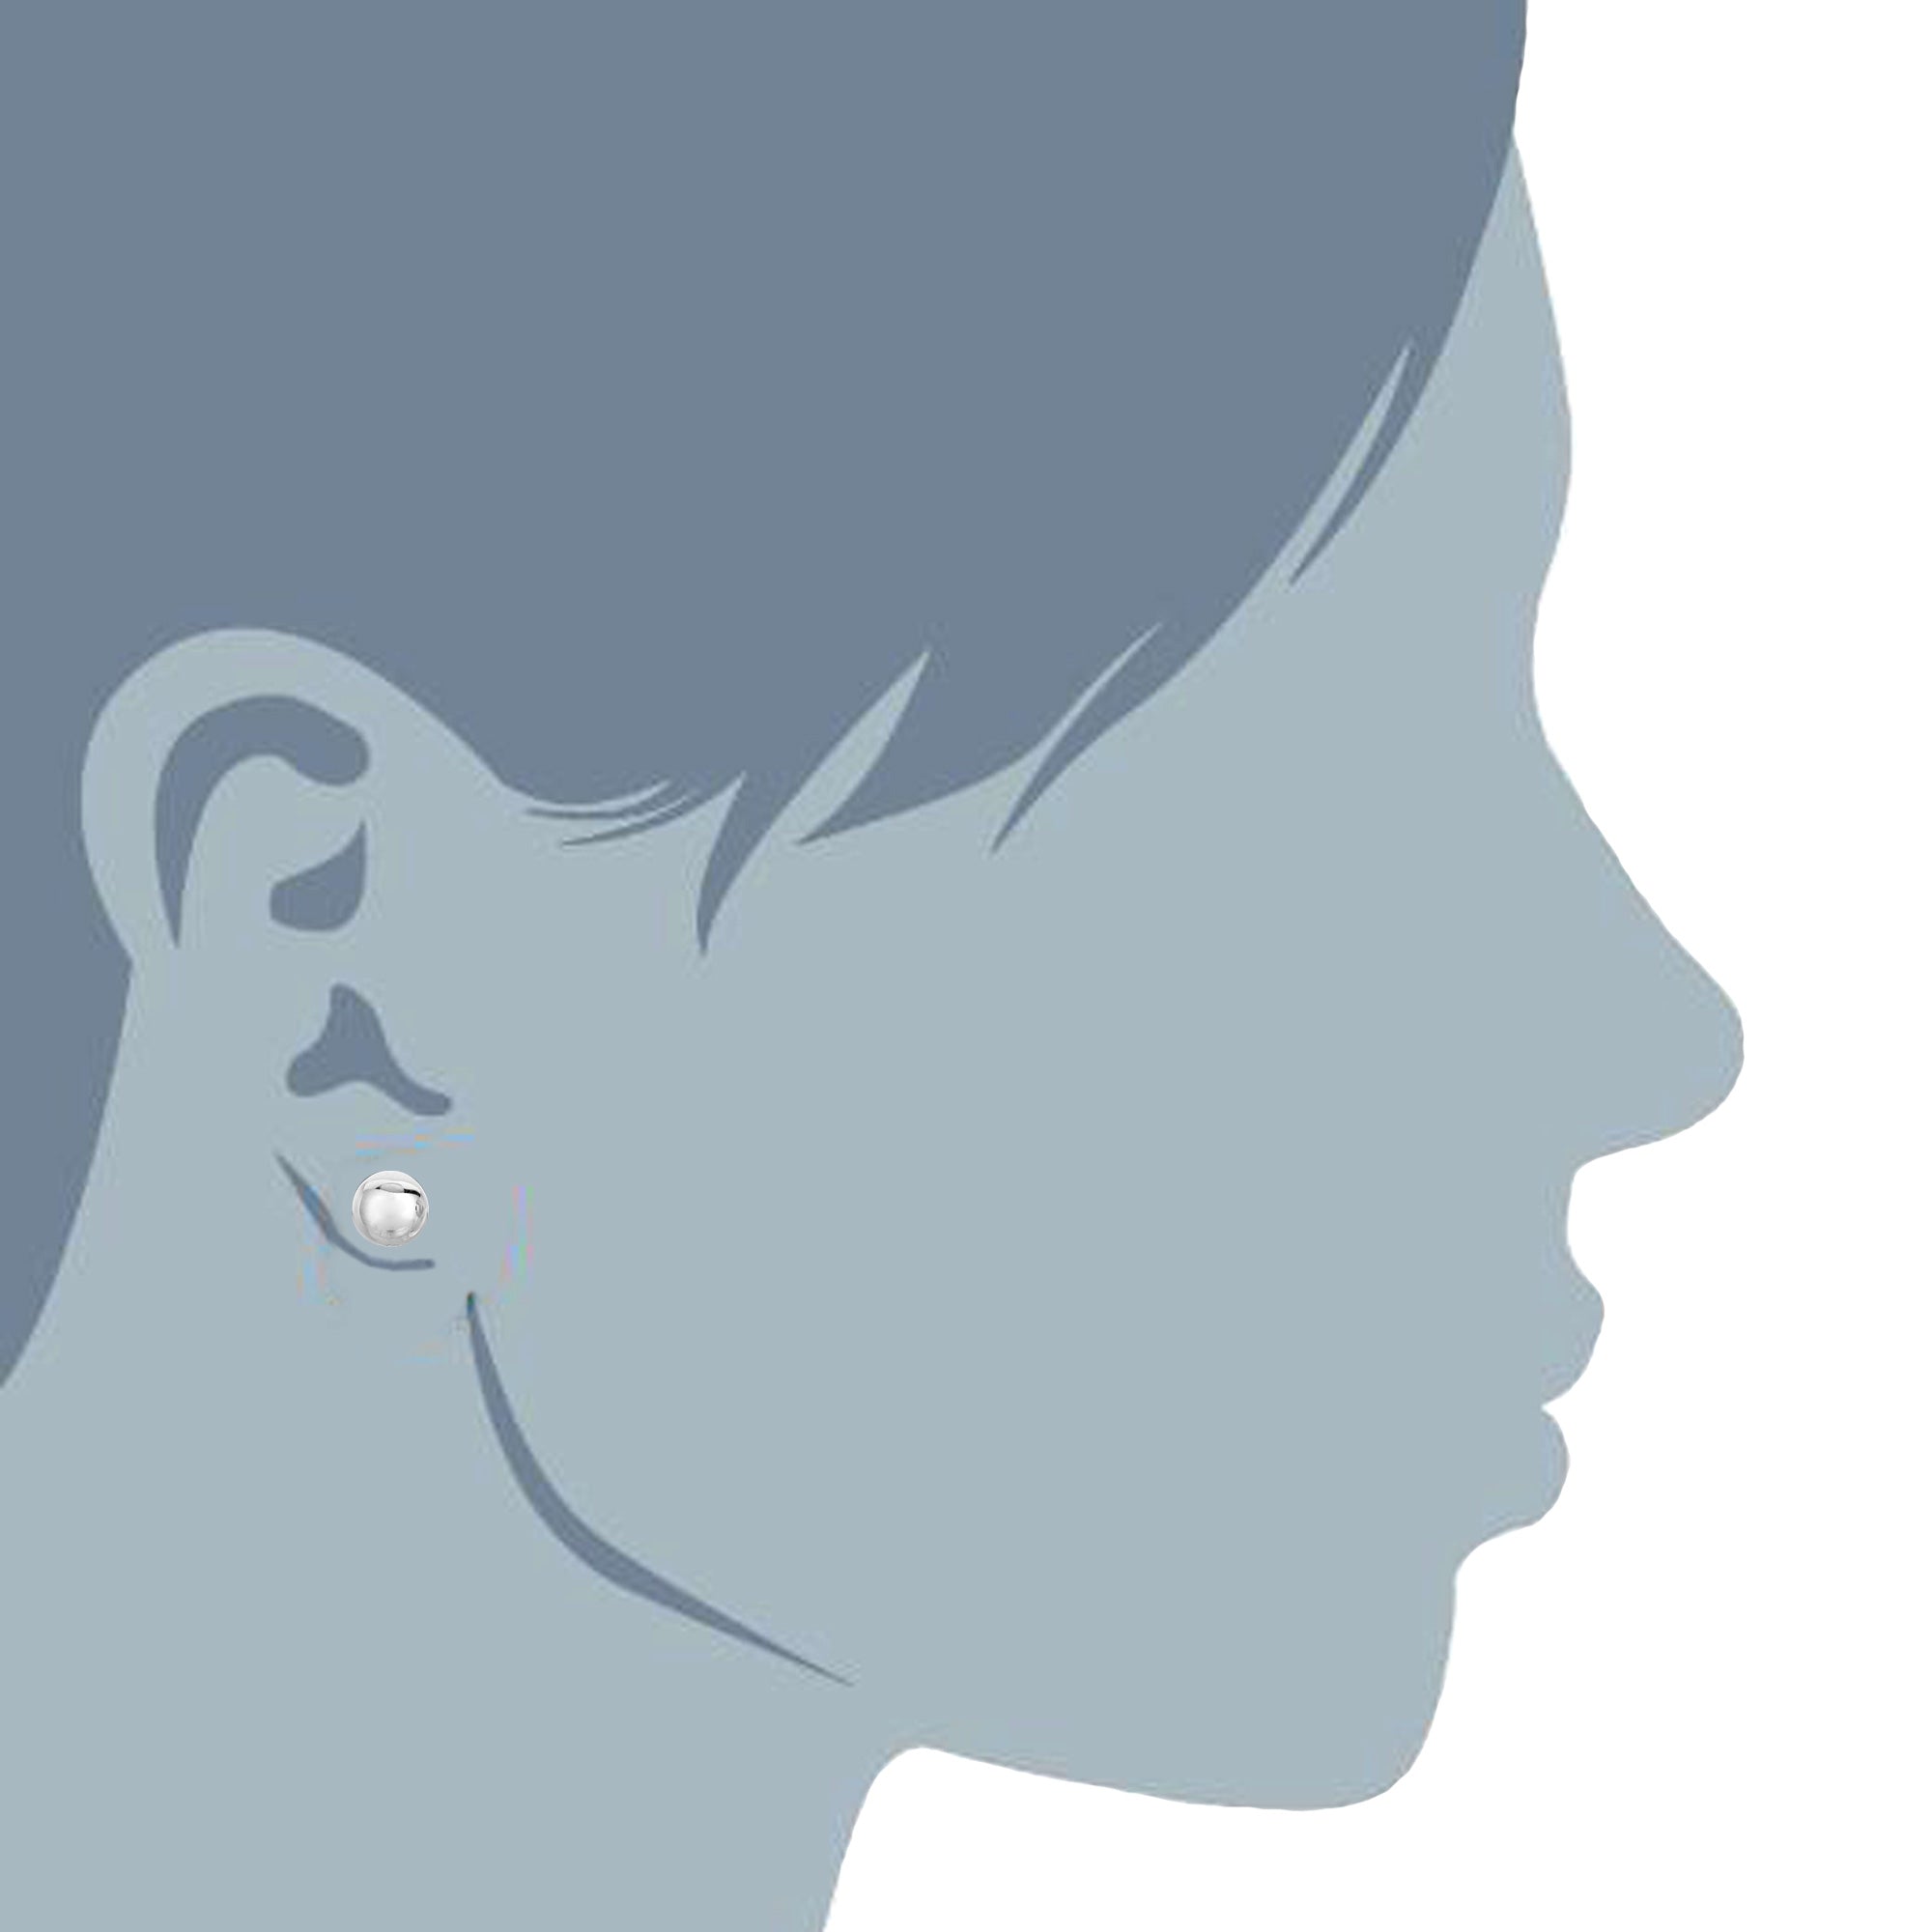 Sterling Silver Ball Stud Earrings fine designer jewelry for men and women